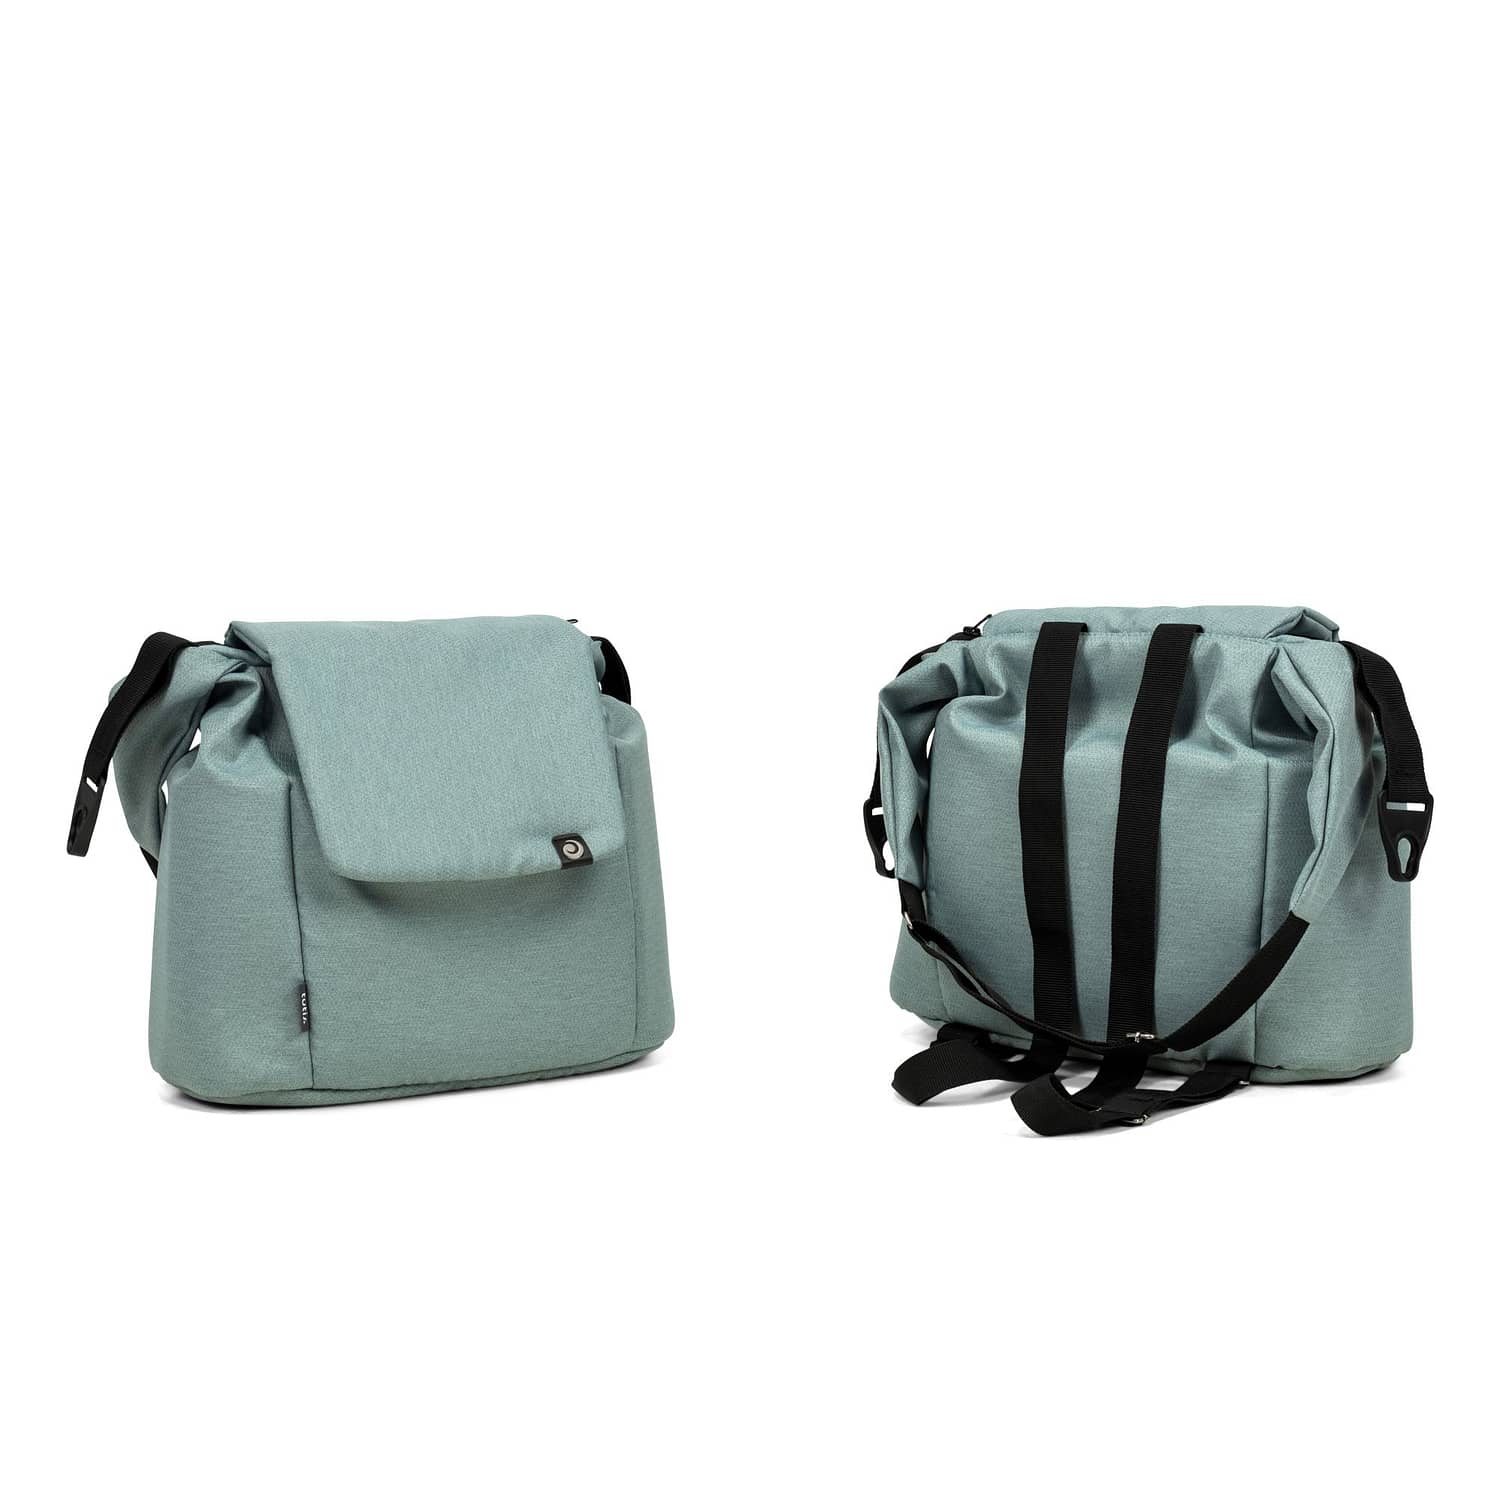 Tutis Mio Plus_243 Turquoise_bag-backpack